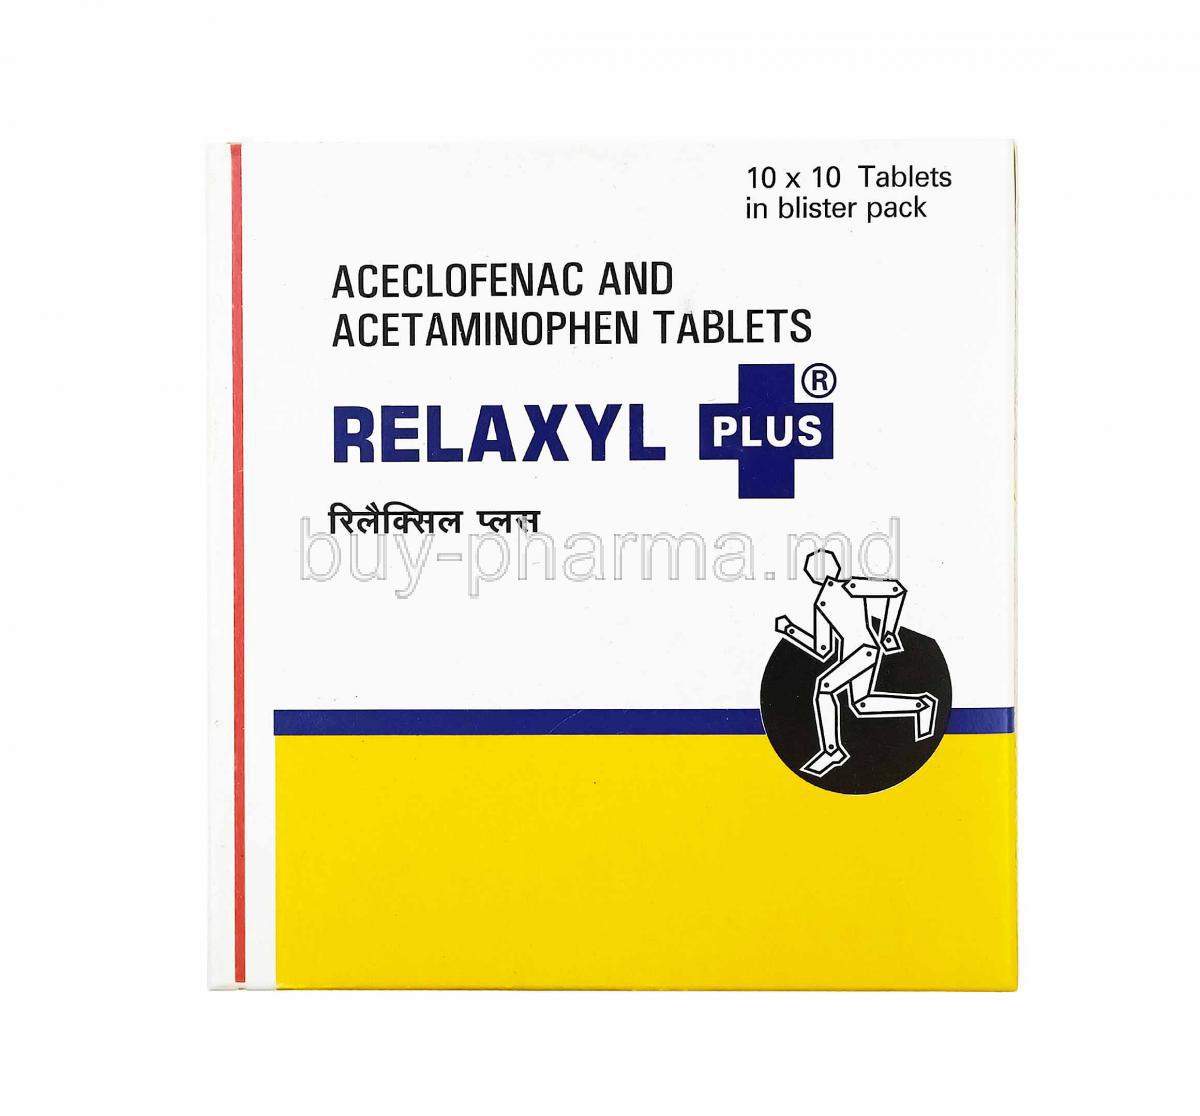 Relaxyl Plus, Diclofenac and Paracetamol